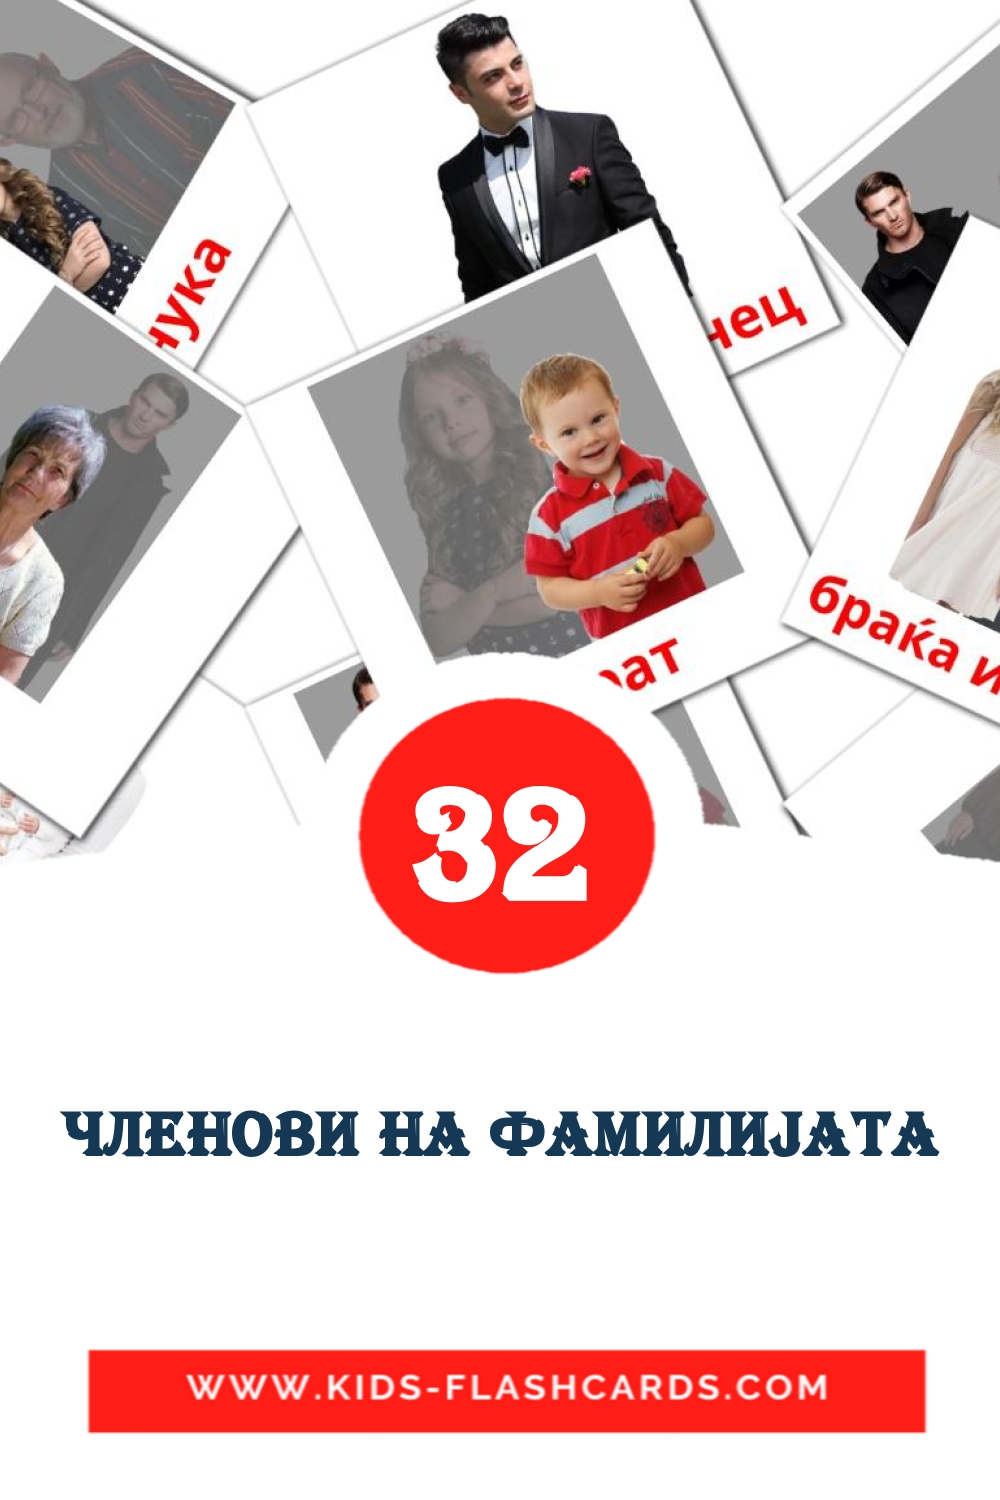 32 carte illustrate di Членови на фамилиjата per la scuola materna in macedone